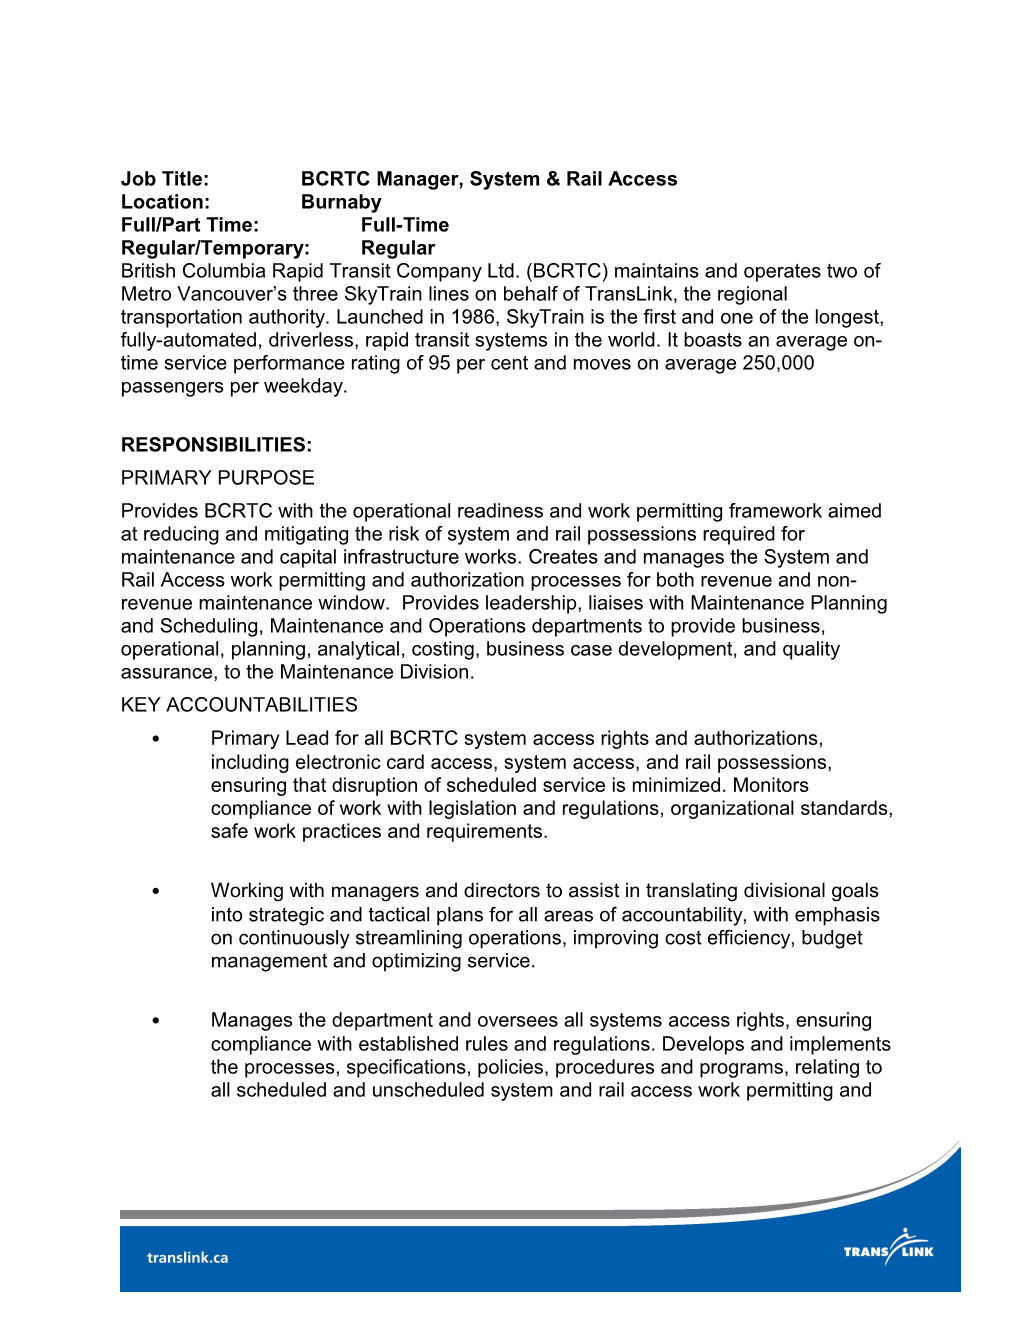 Job Title: BCRTC Manager, System & Rail Access